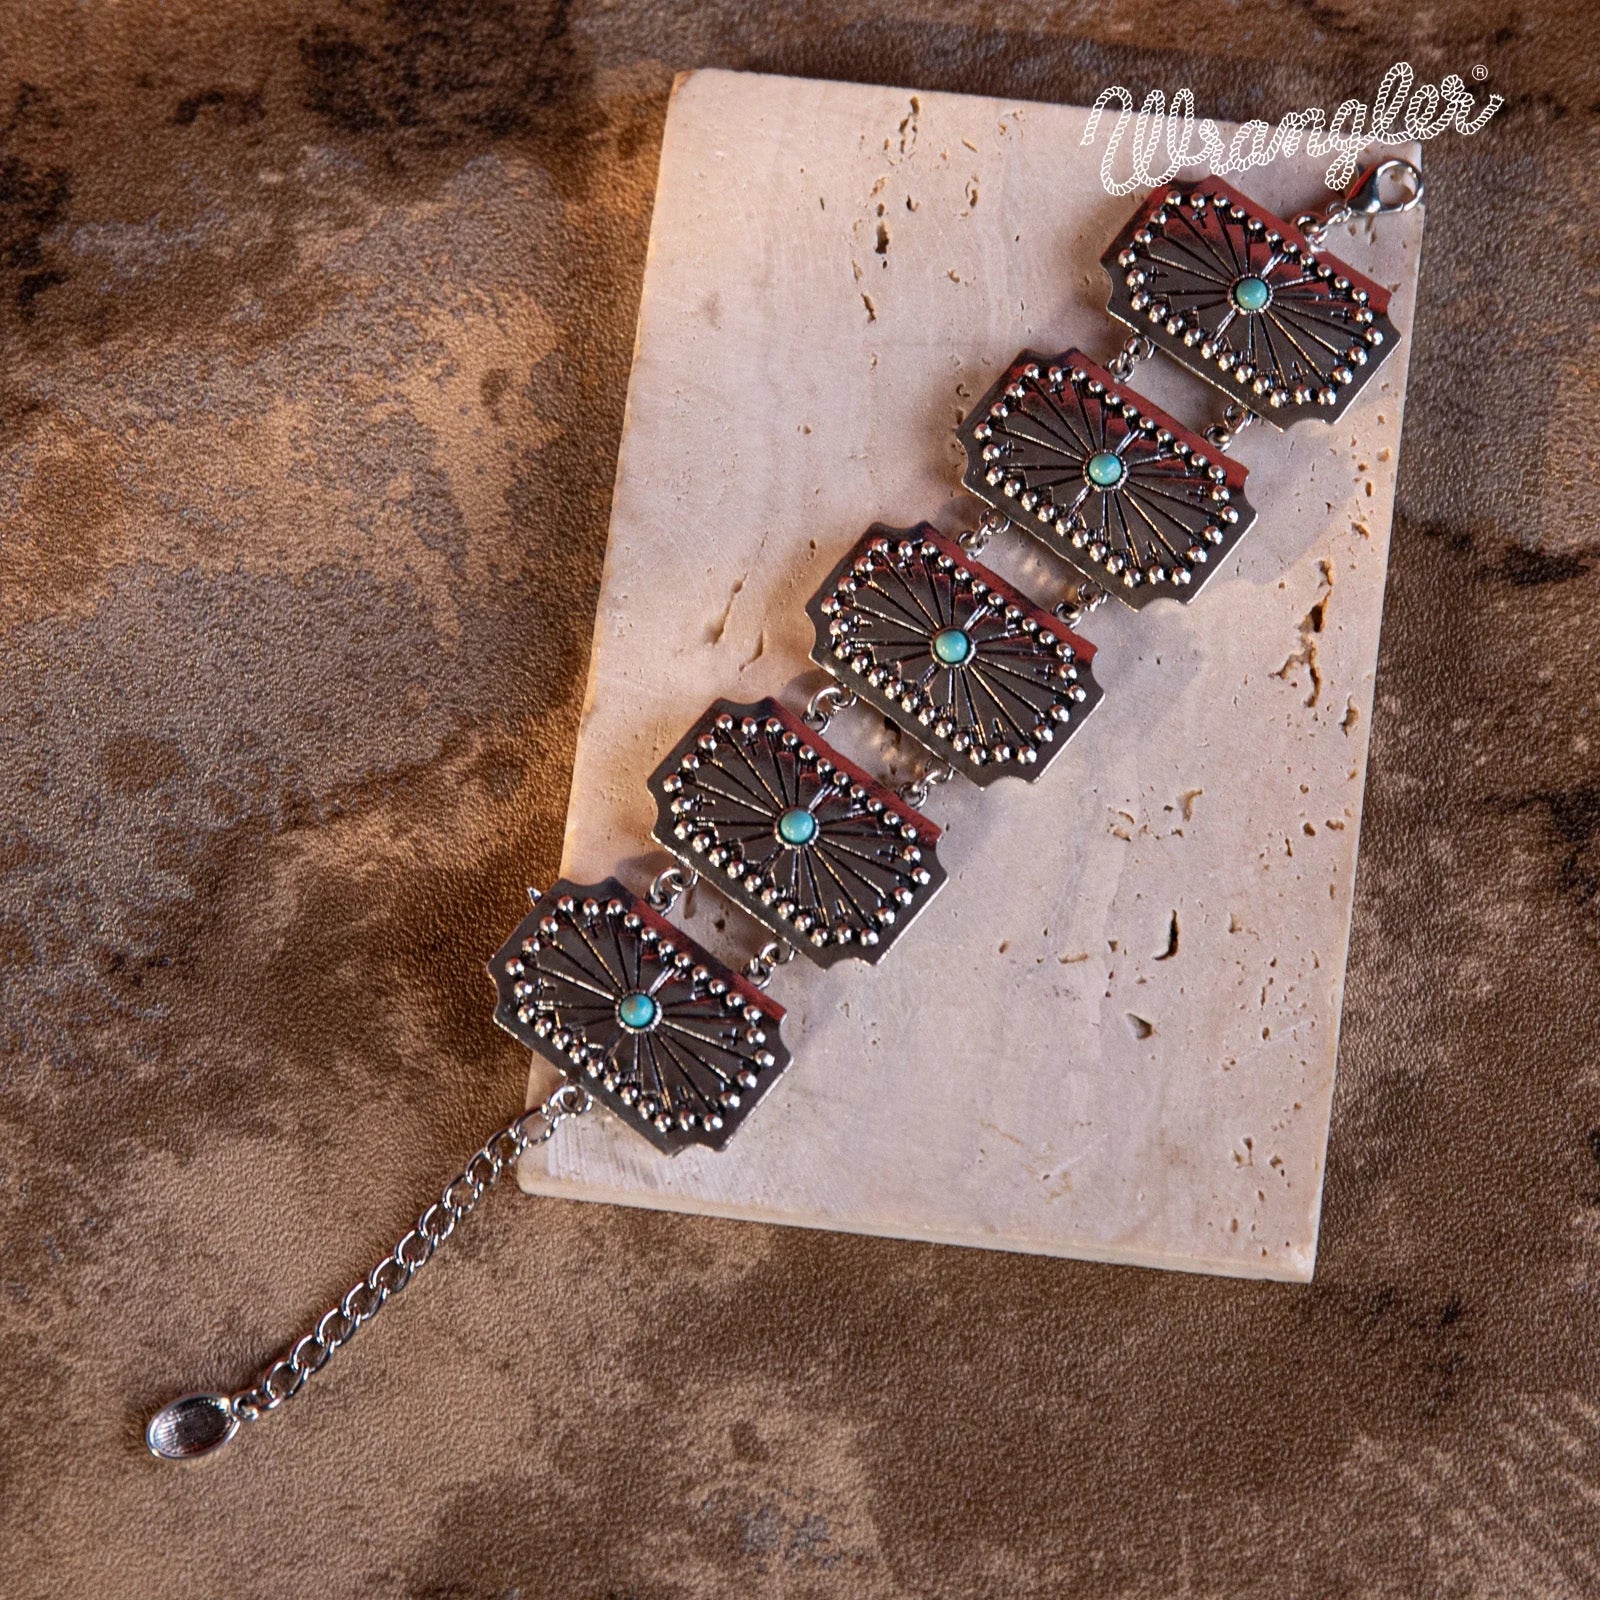 Wrangler Silver Chain Concho Cuff Bracelet Turquoise Stone